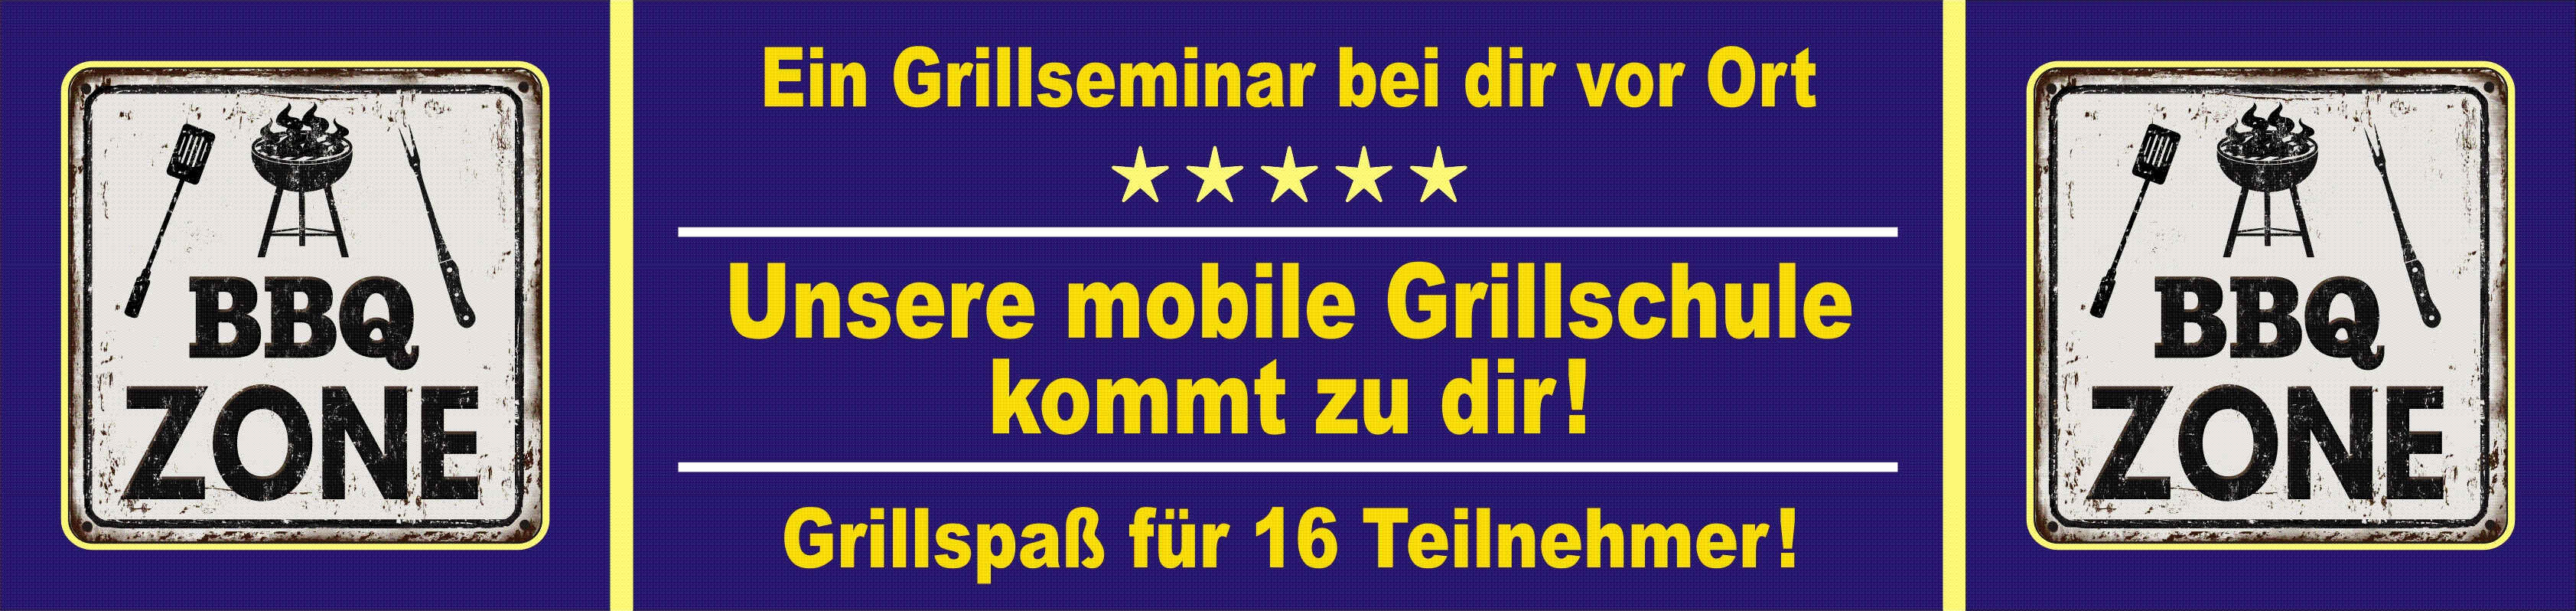 Ein Grillkurs bei dir vor Ort | Mobile Grillschule | Kochkurs in Osnabrück, Bielefeld, Gütersloh, Paderborn...